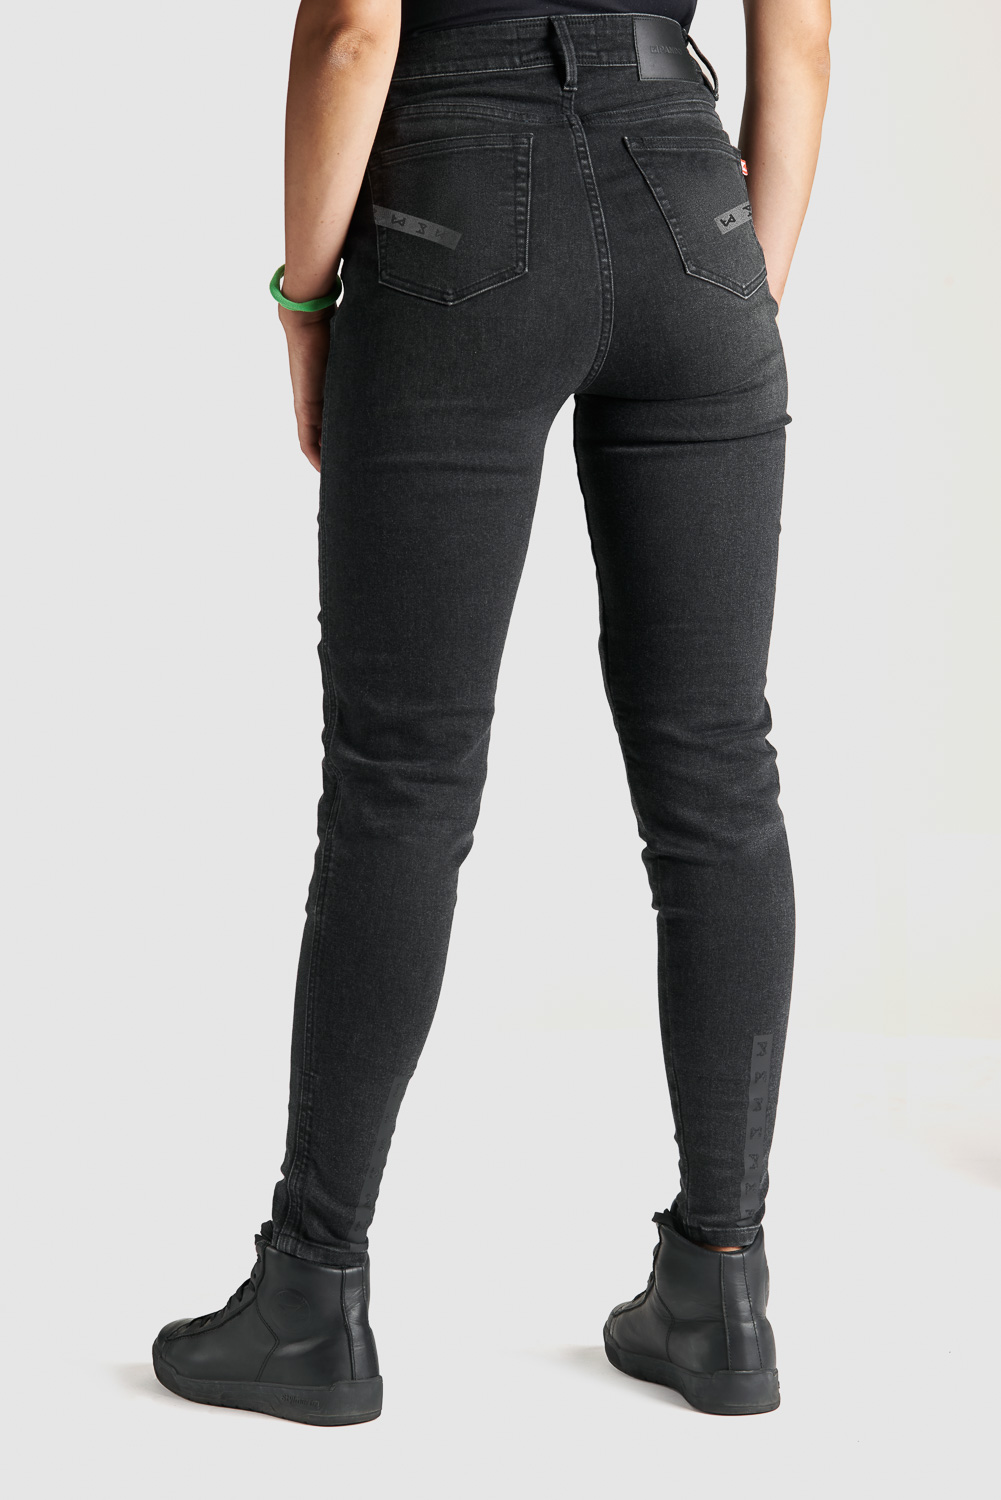 KUSARI COR 01 – Women Motorcycle Jeans Skinny-Fit Cordura® 2